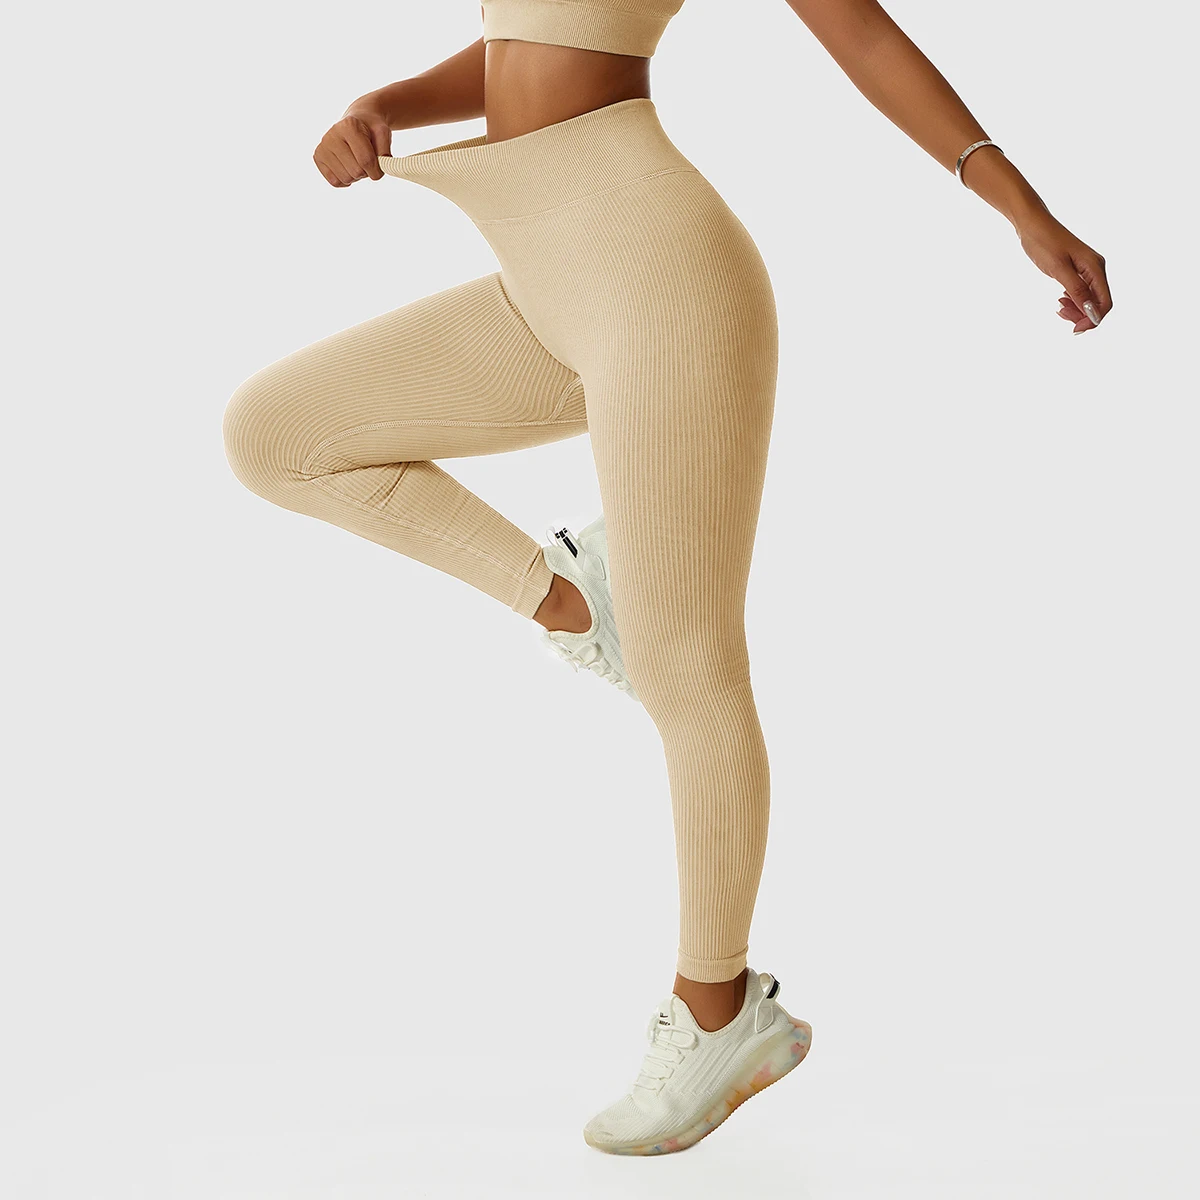 

Women Yoga Pants Seamless High Waist Leggings Female Gym Sport Tights Running Fitness Workout Legging Push Up Hips Sports Pants